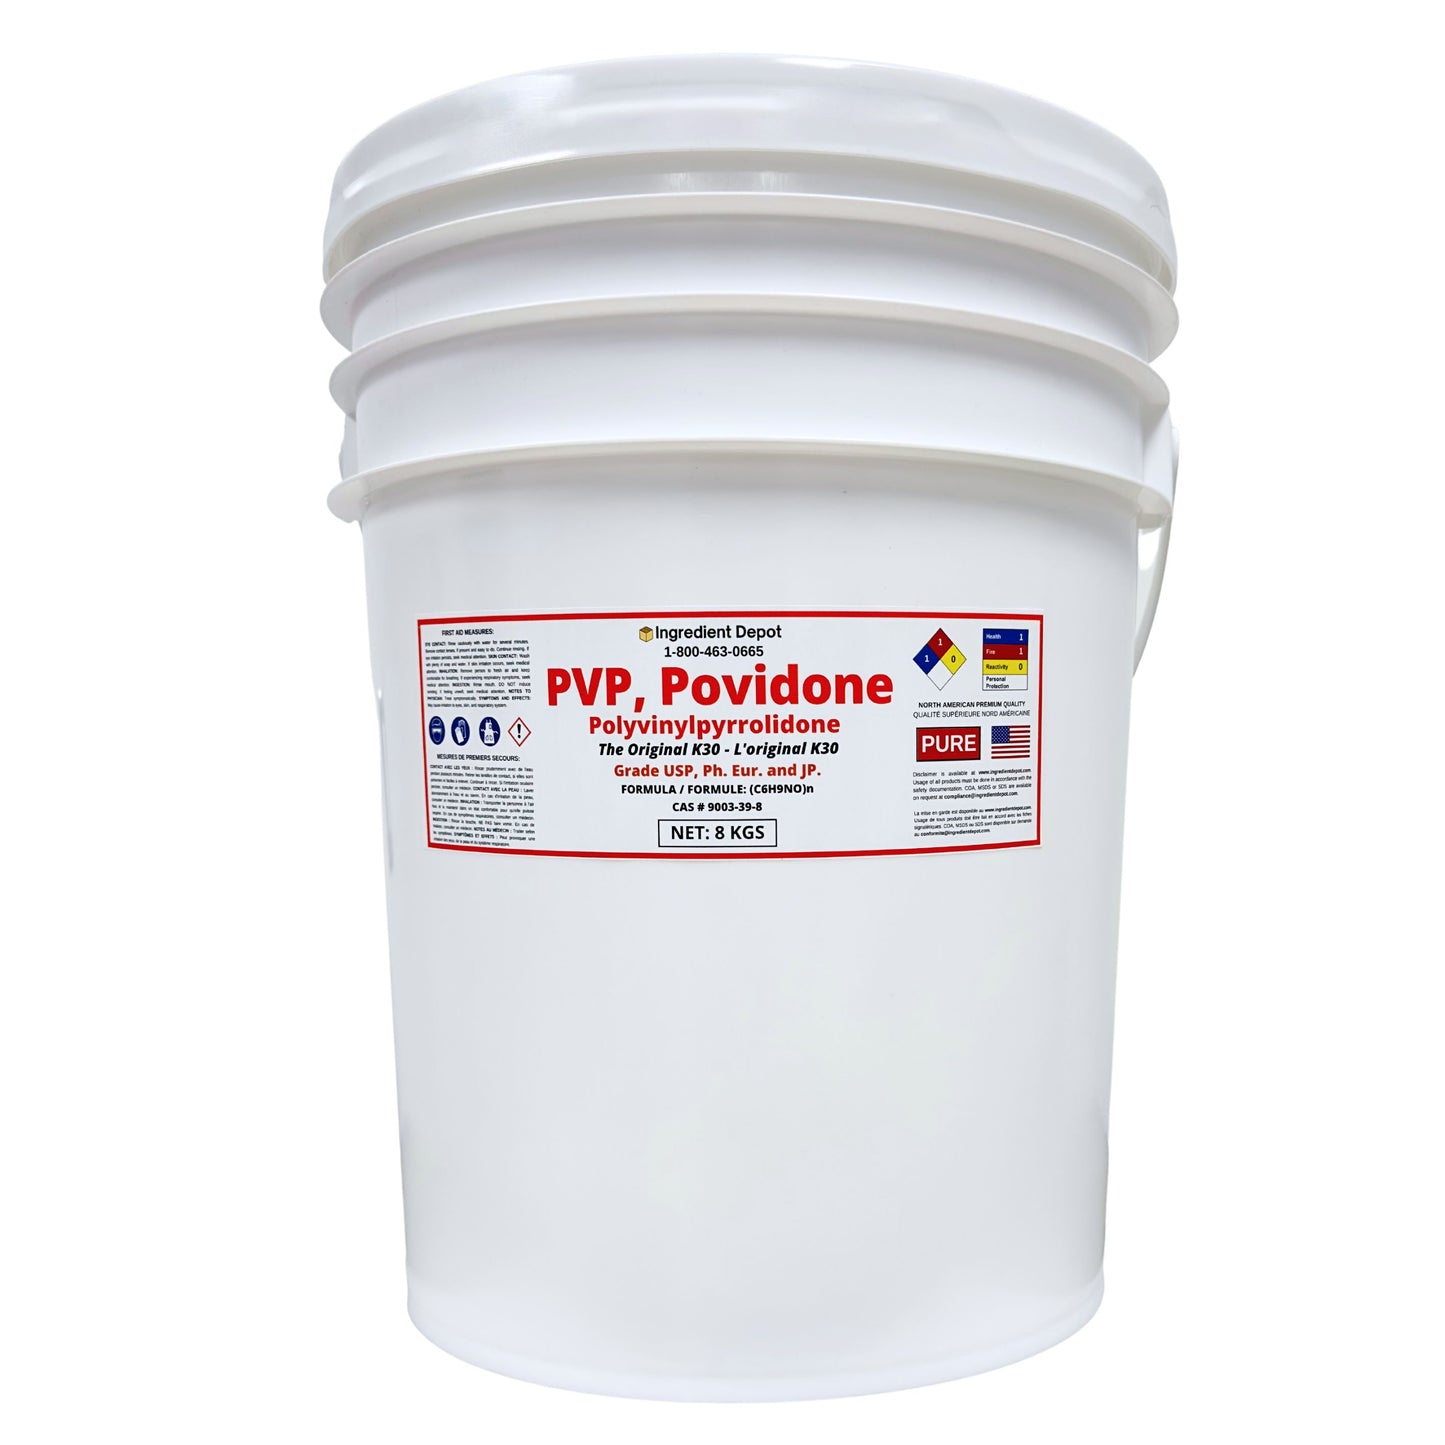 PVP Original K30, Povidone, Polyvinylpyrrolidone 8 kgs